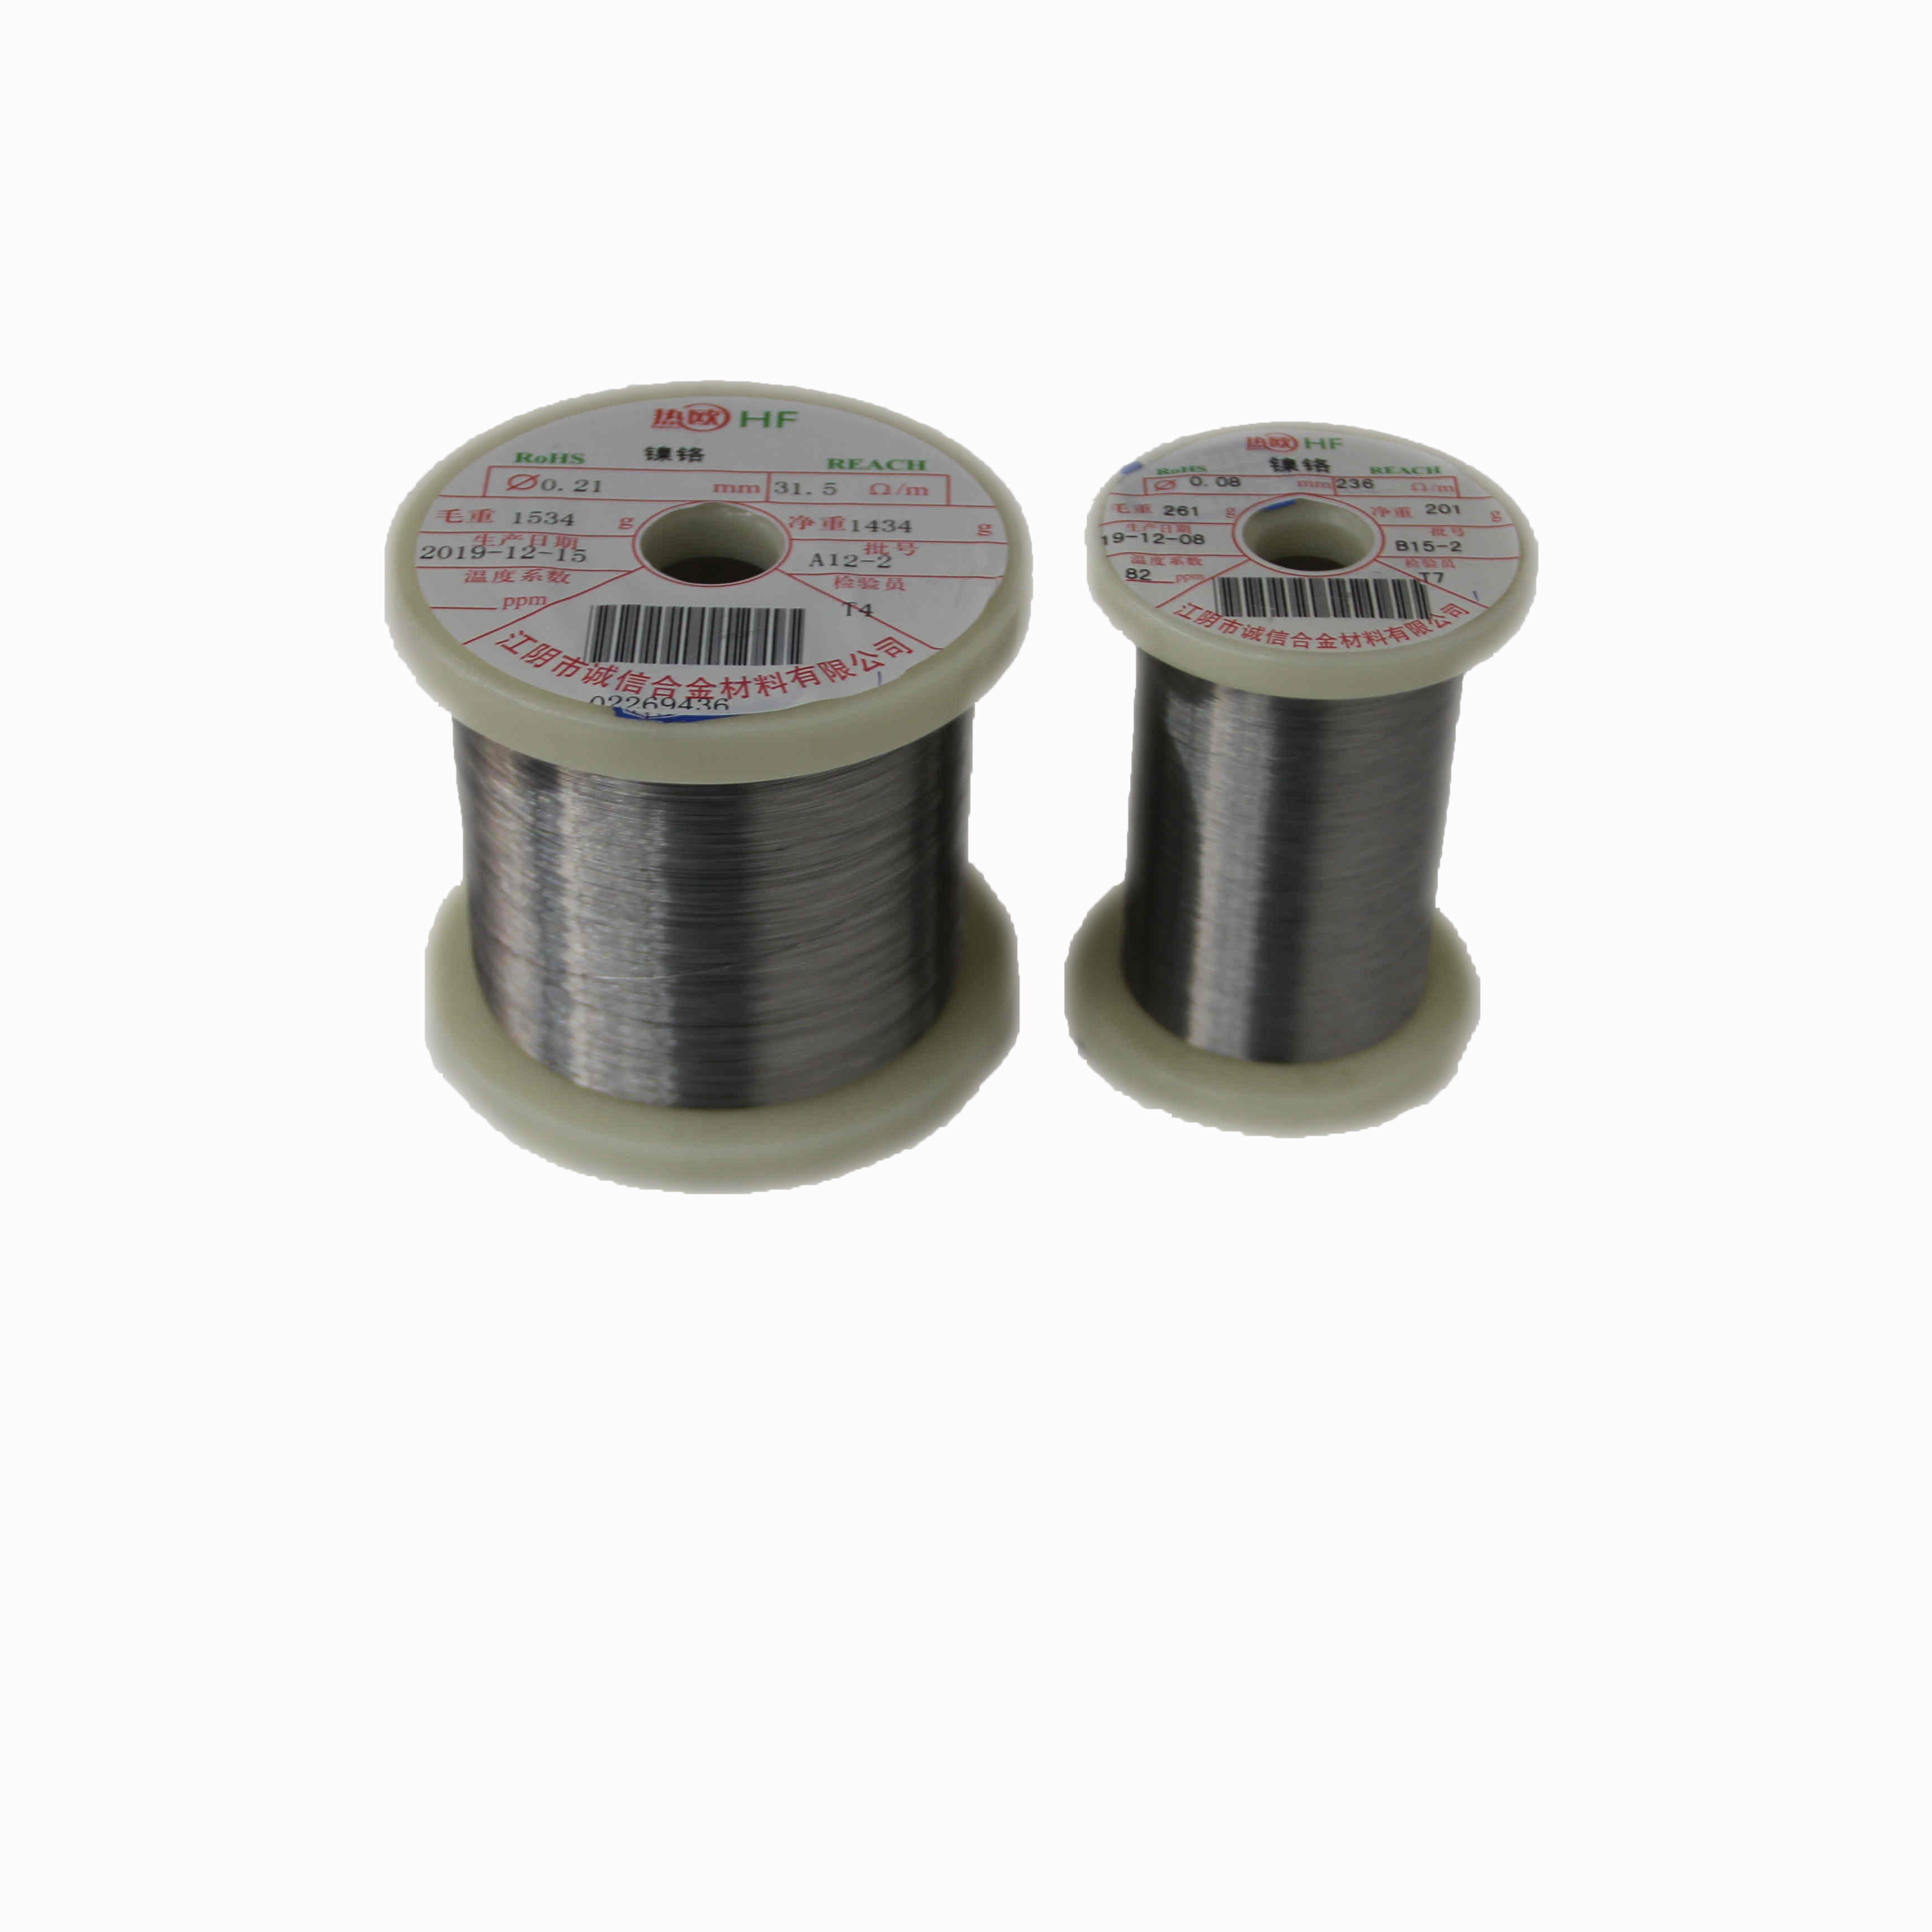 Cr30Ni70 Nickel-Chrome & Nickel-Chrome-Iron alloy wire